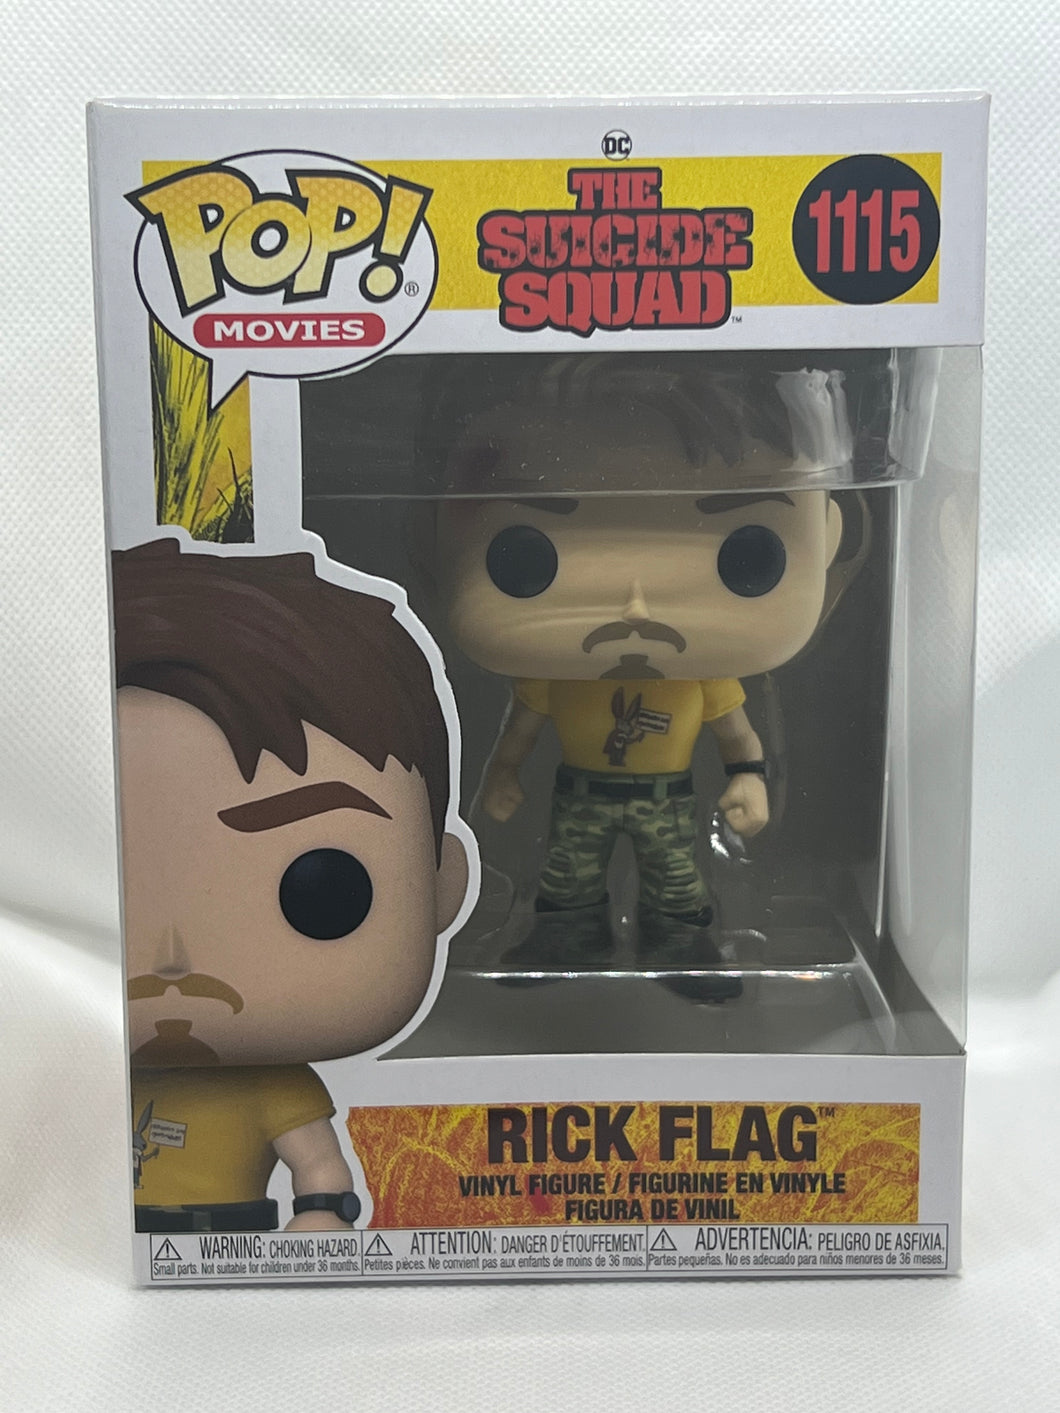 Rick Flag 1115 Suicide Squad Funko Pop